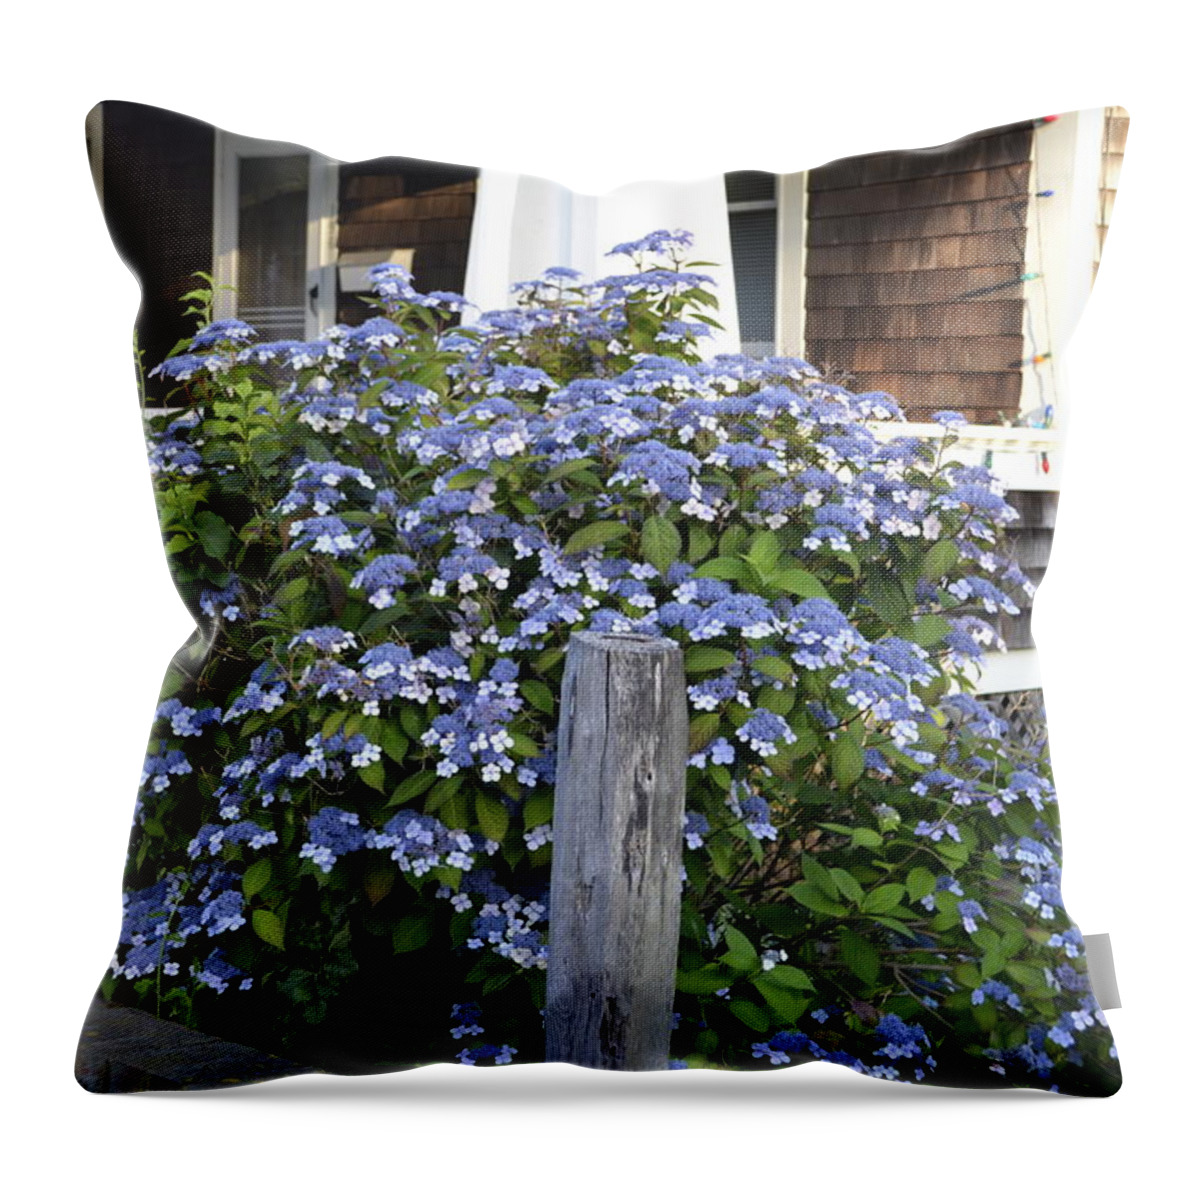 Provincetown Throw Pillow featuring the photograph Blue Lace Cap Hydrangea by Ellen Koplow